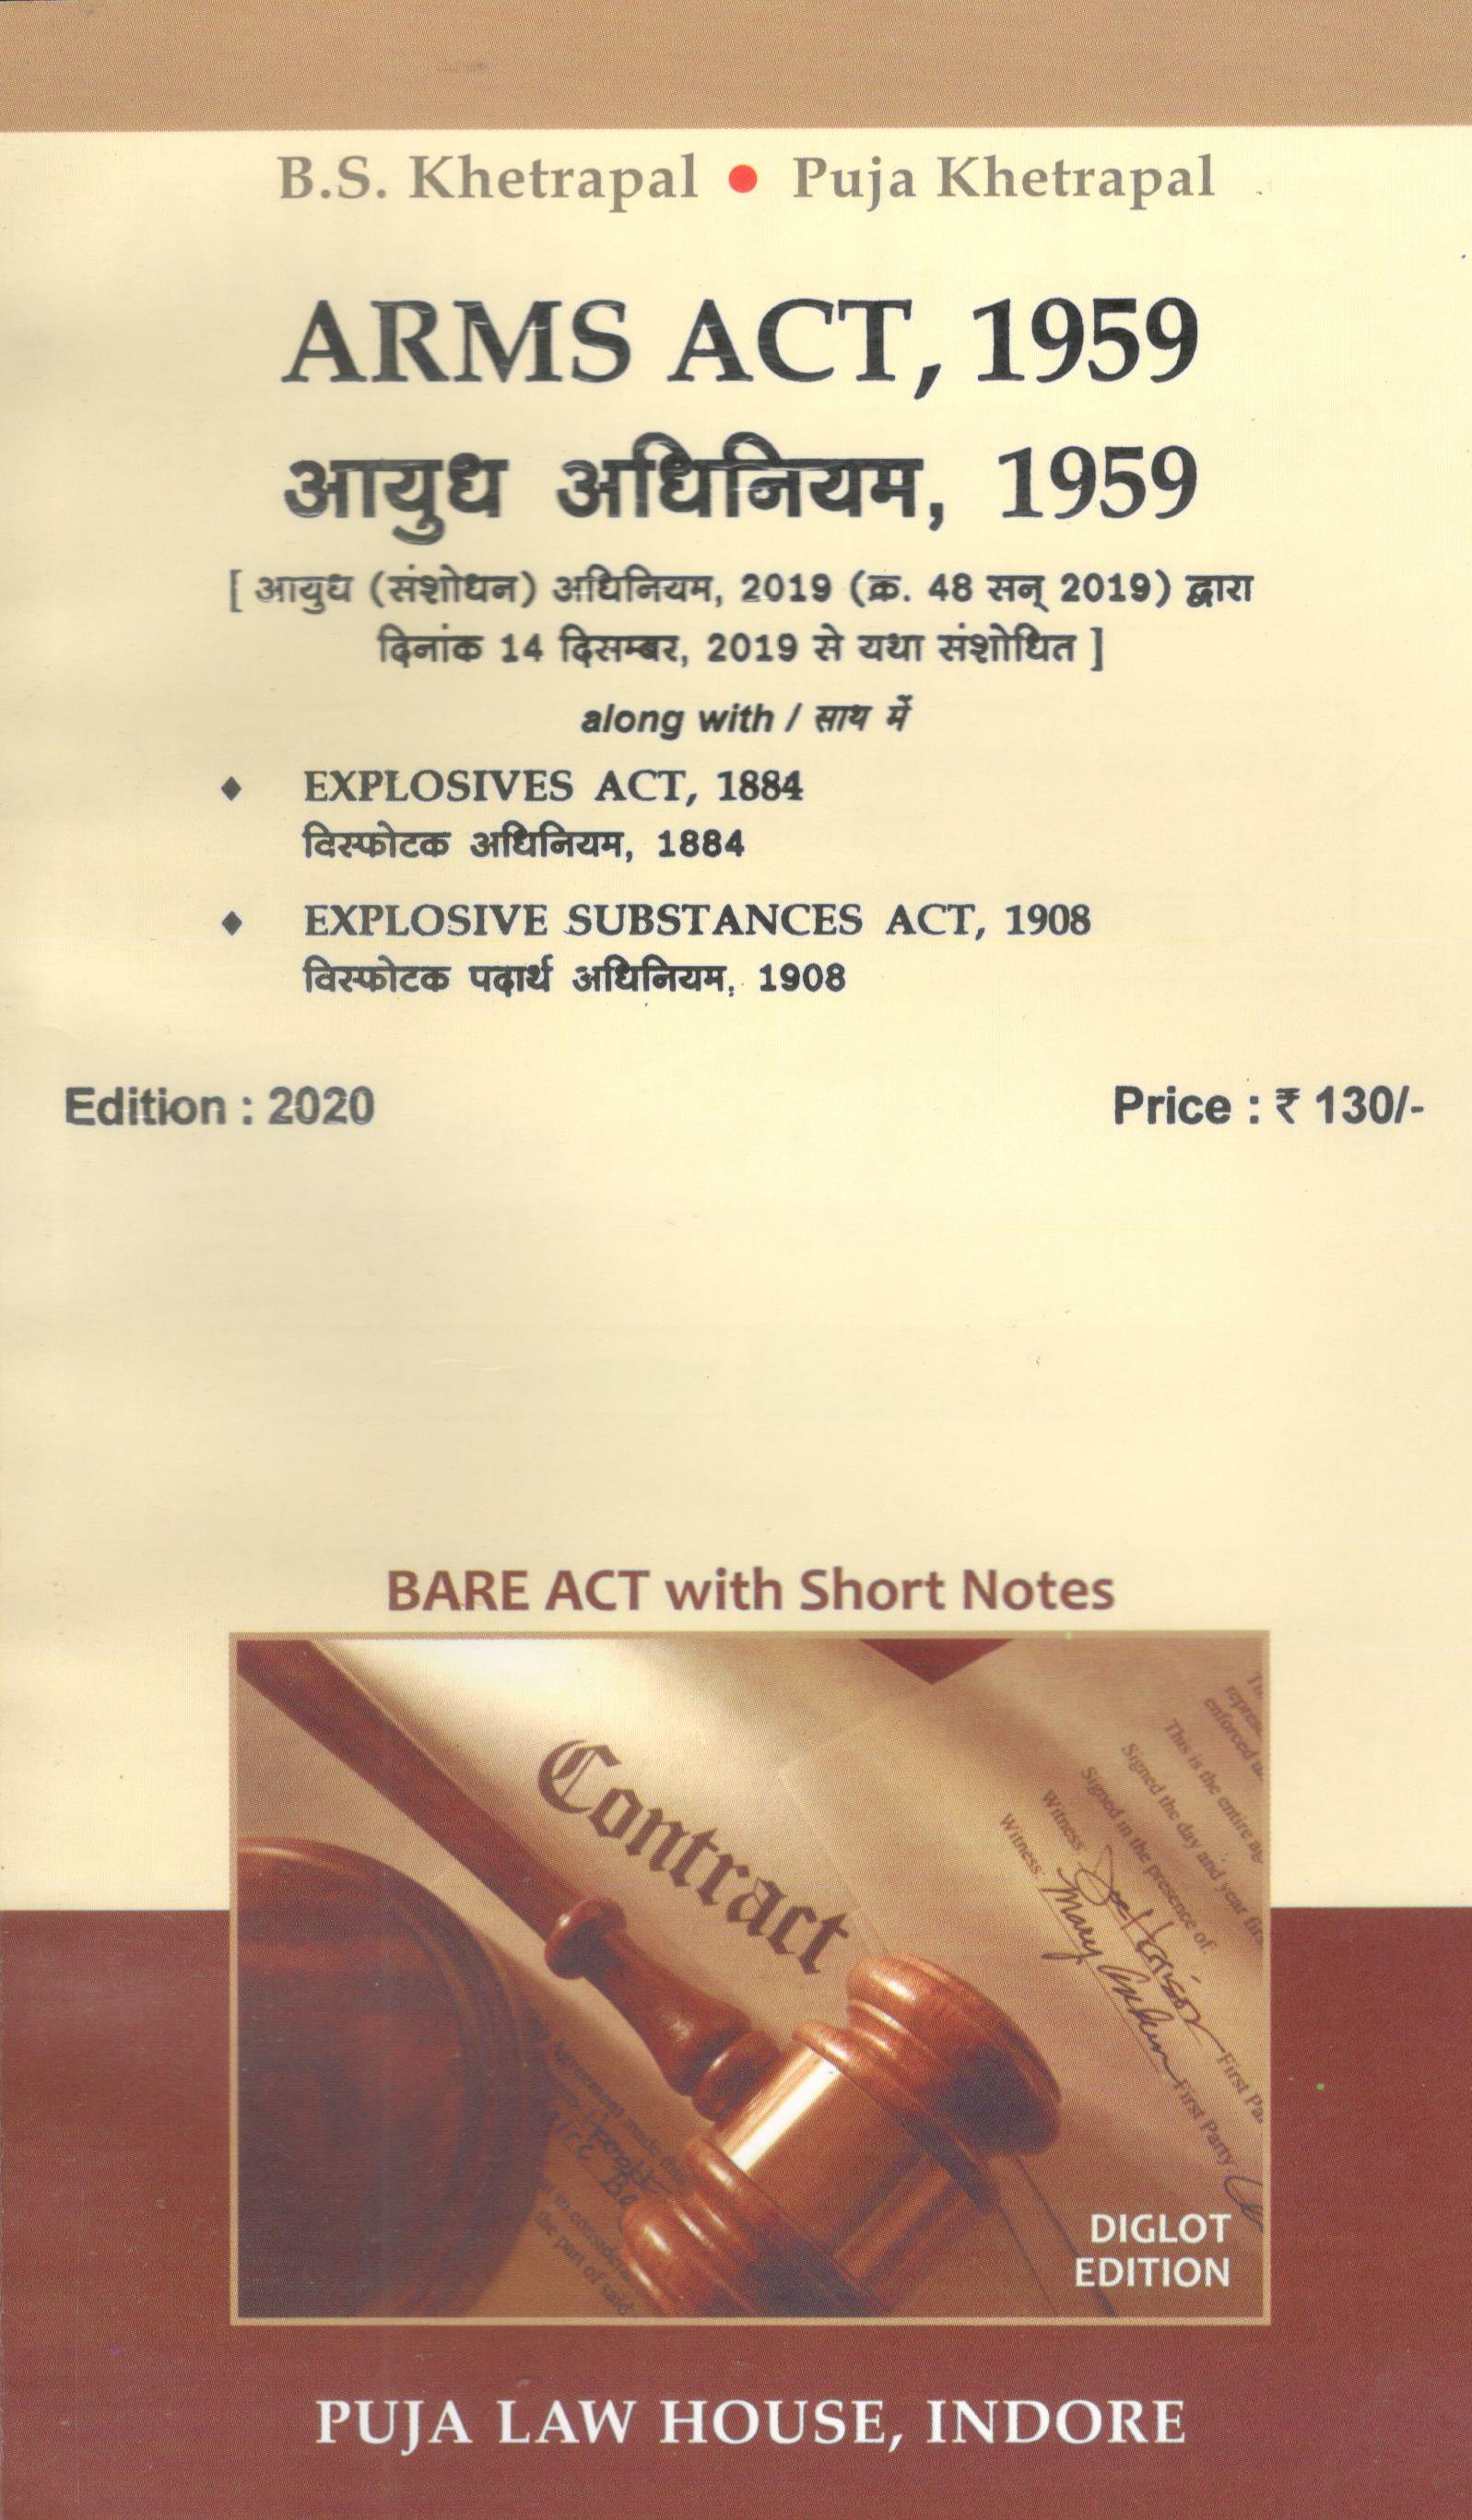  Buy Arms Act, 1959 - आयुध अधिनियम, 1959 / Explosives Act, 1884 - विस्फोटक अधिनियम, 1884 / Explosive Substances Act, 1908 - विस्फोटक पदार्थ अधिनियम, 1908